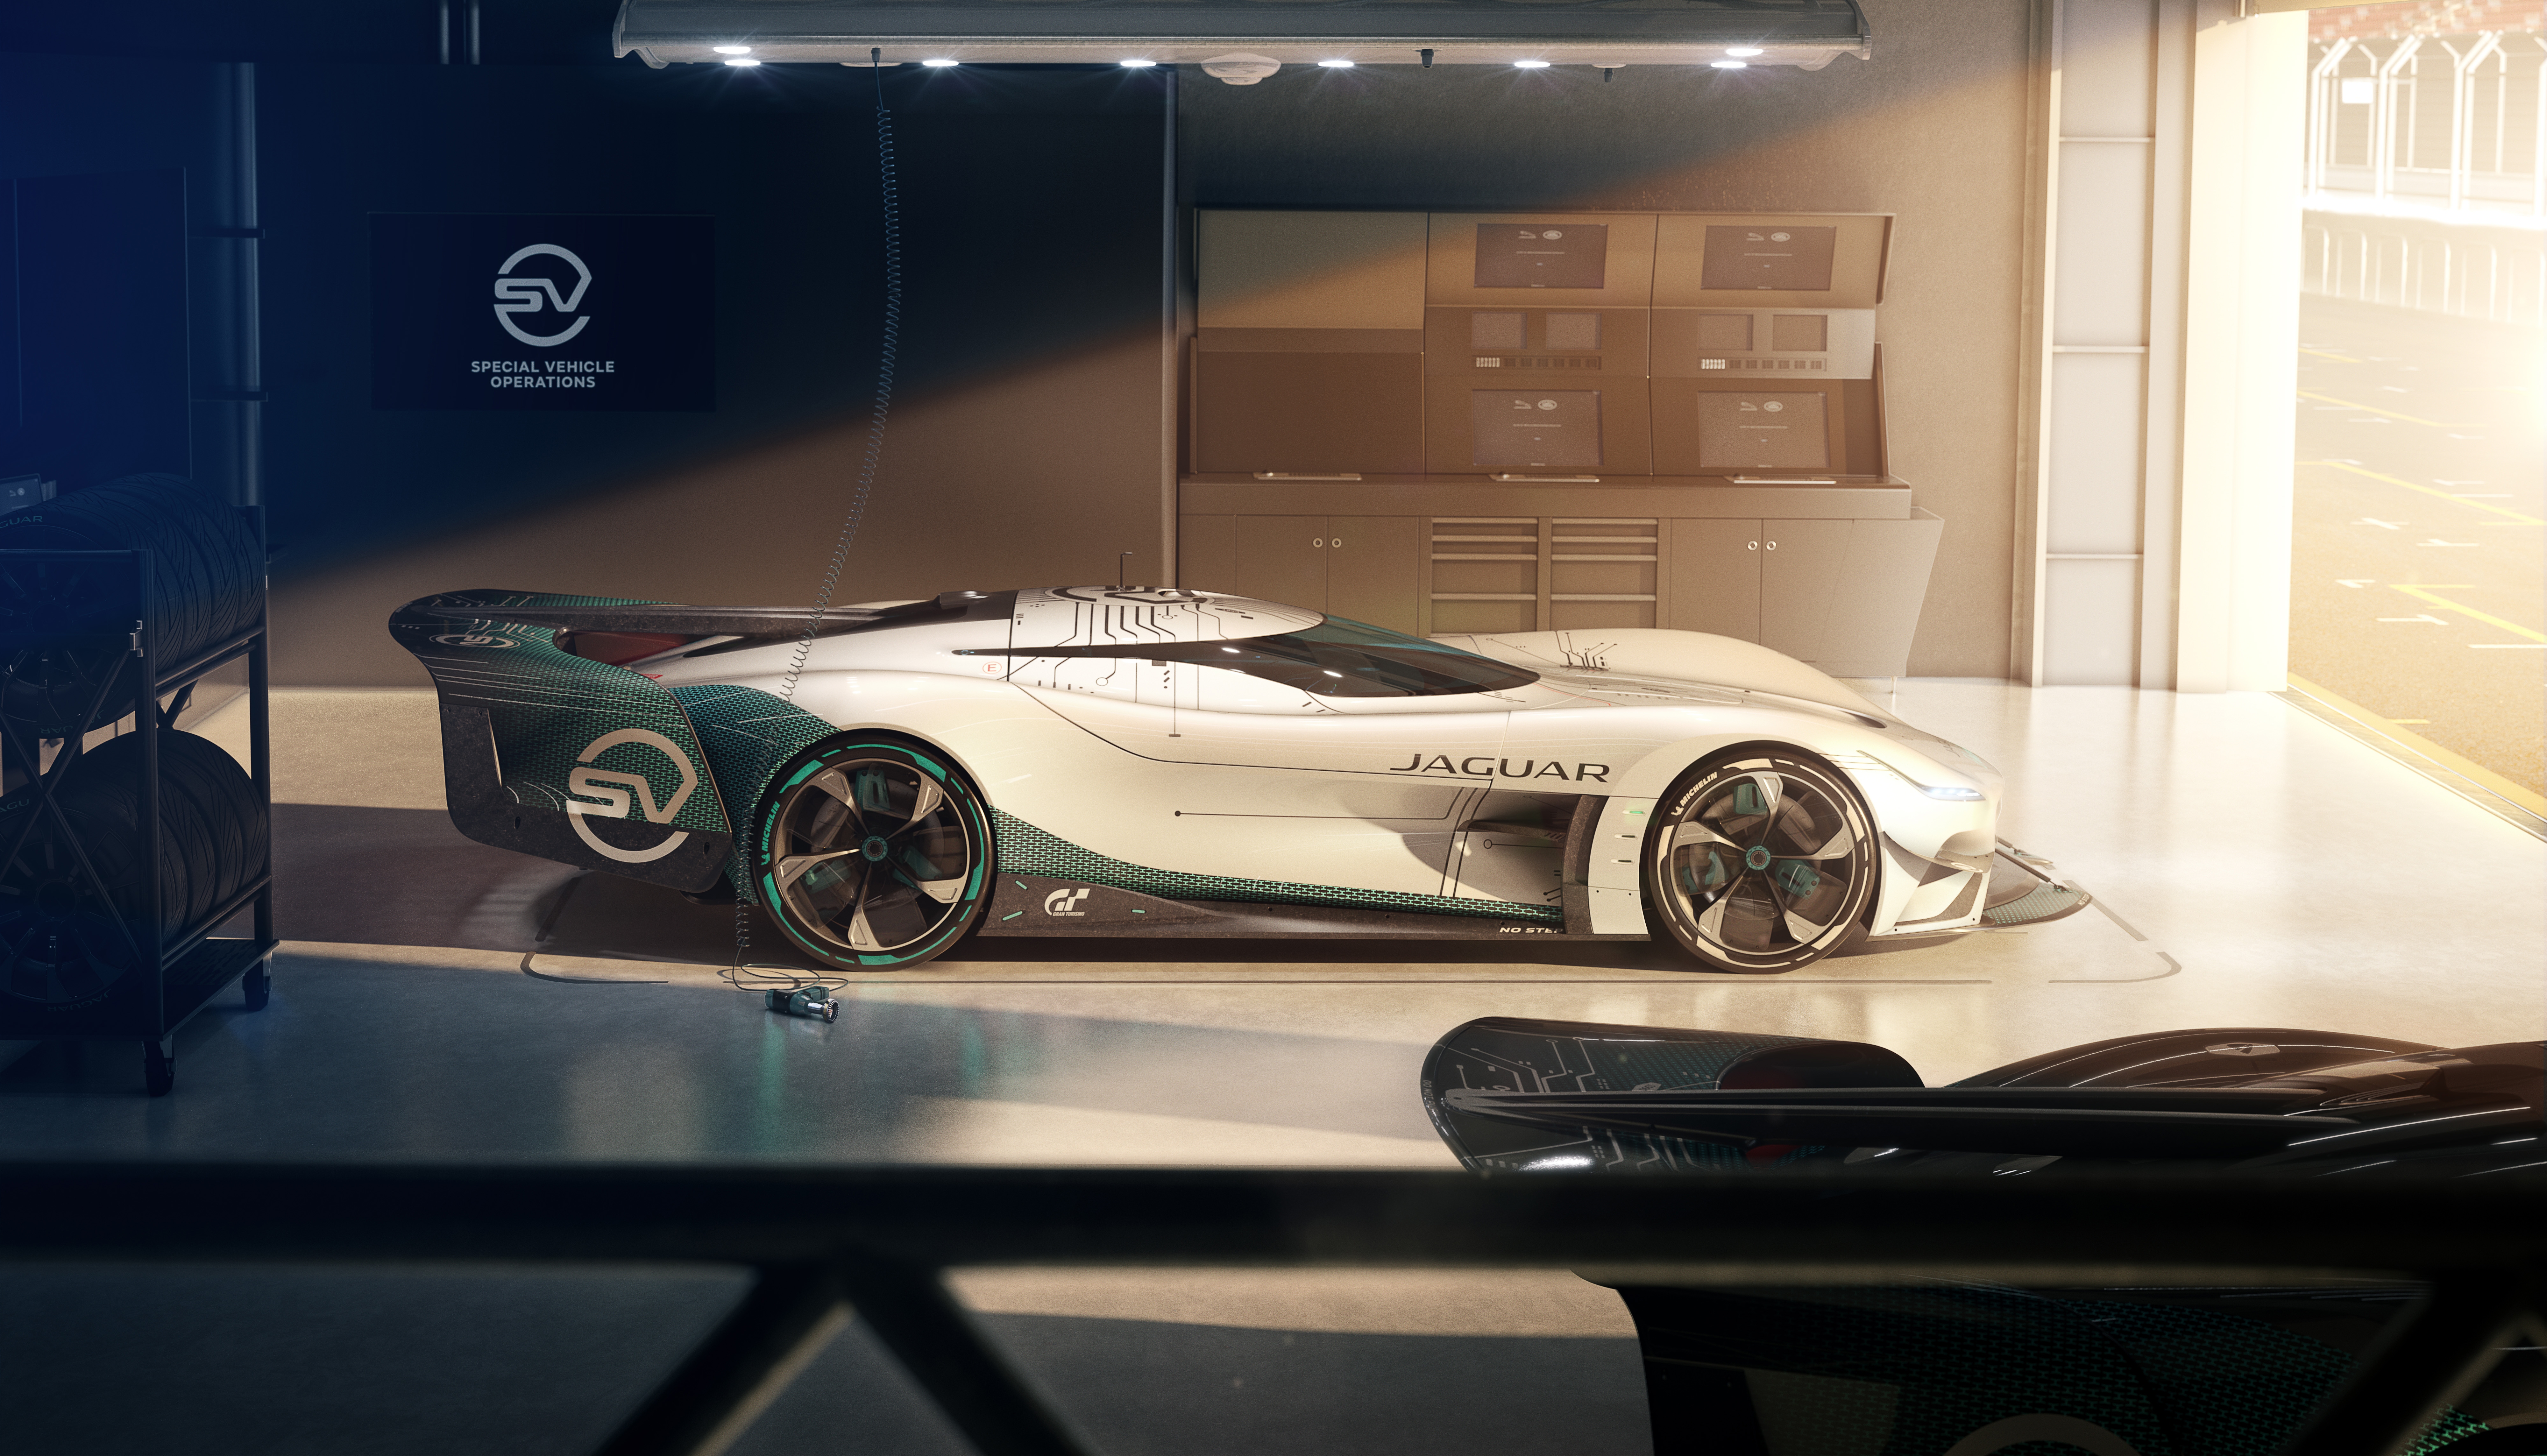 HD wallpaper, Jaguar Vision Gran Turismo Sv, 5K, 8K, 2021, Concept Cars, Hypercars